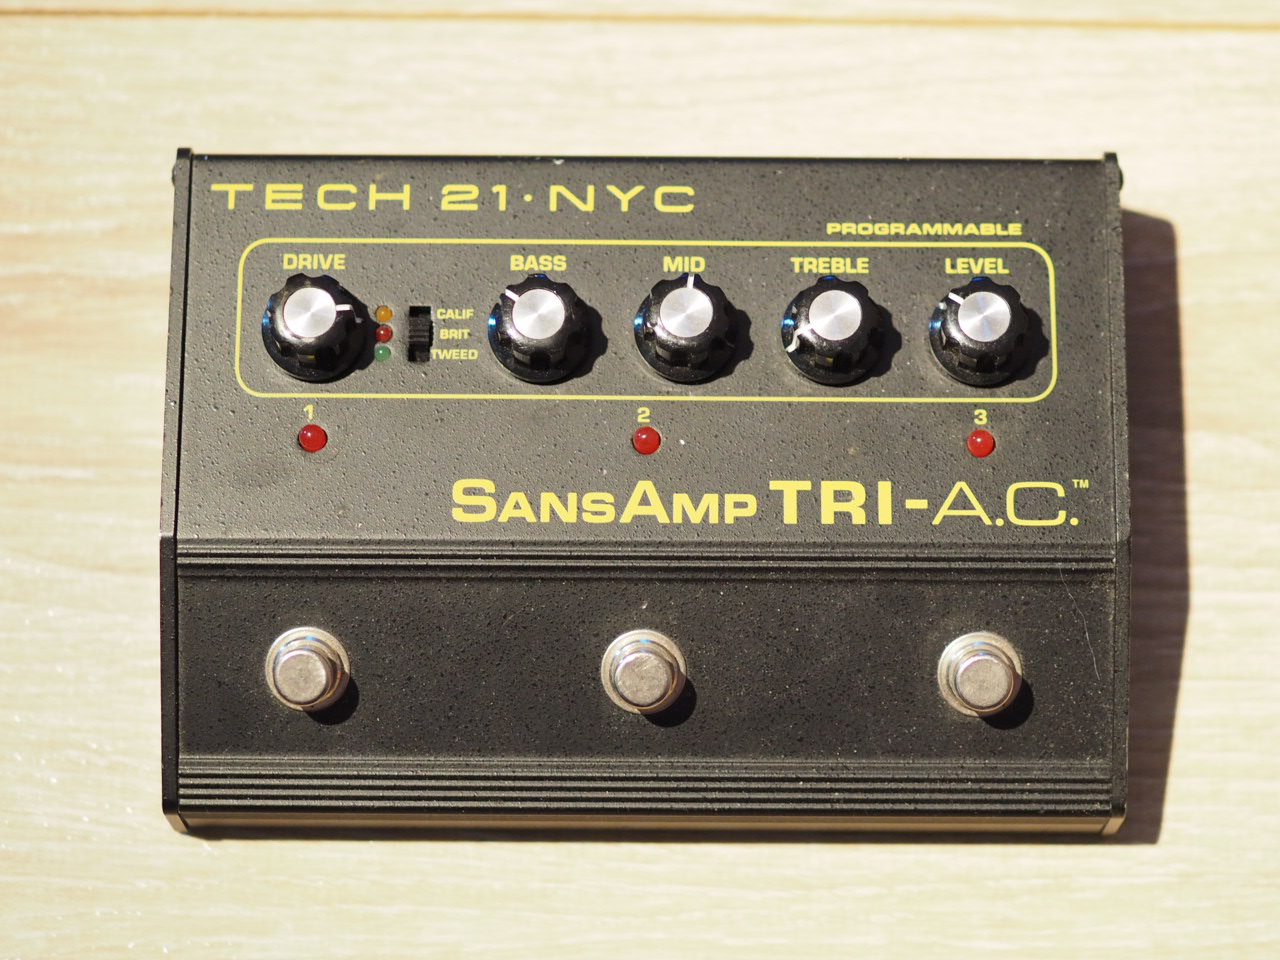 TECK21・NYC SANSAMP TRI-AC プリアンプ - ギター